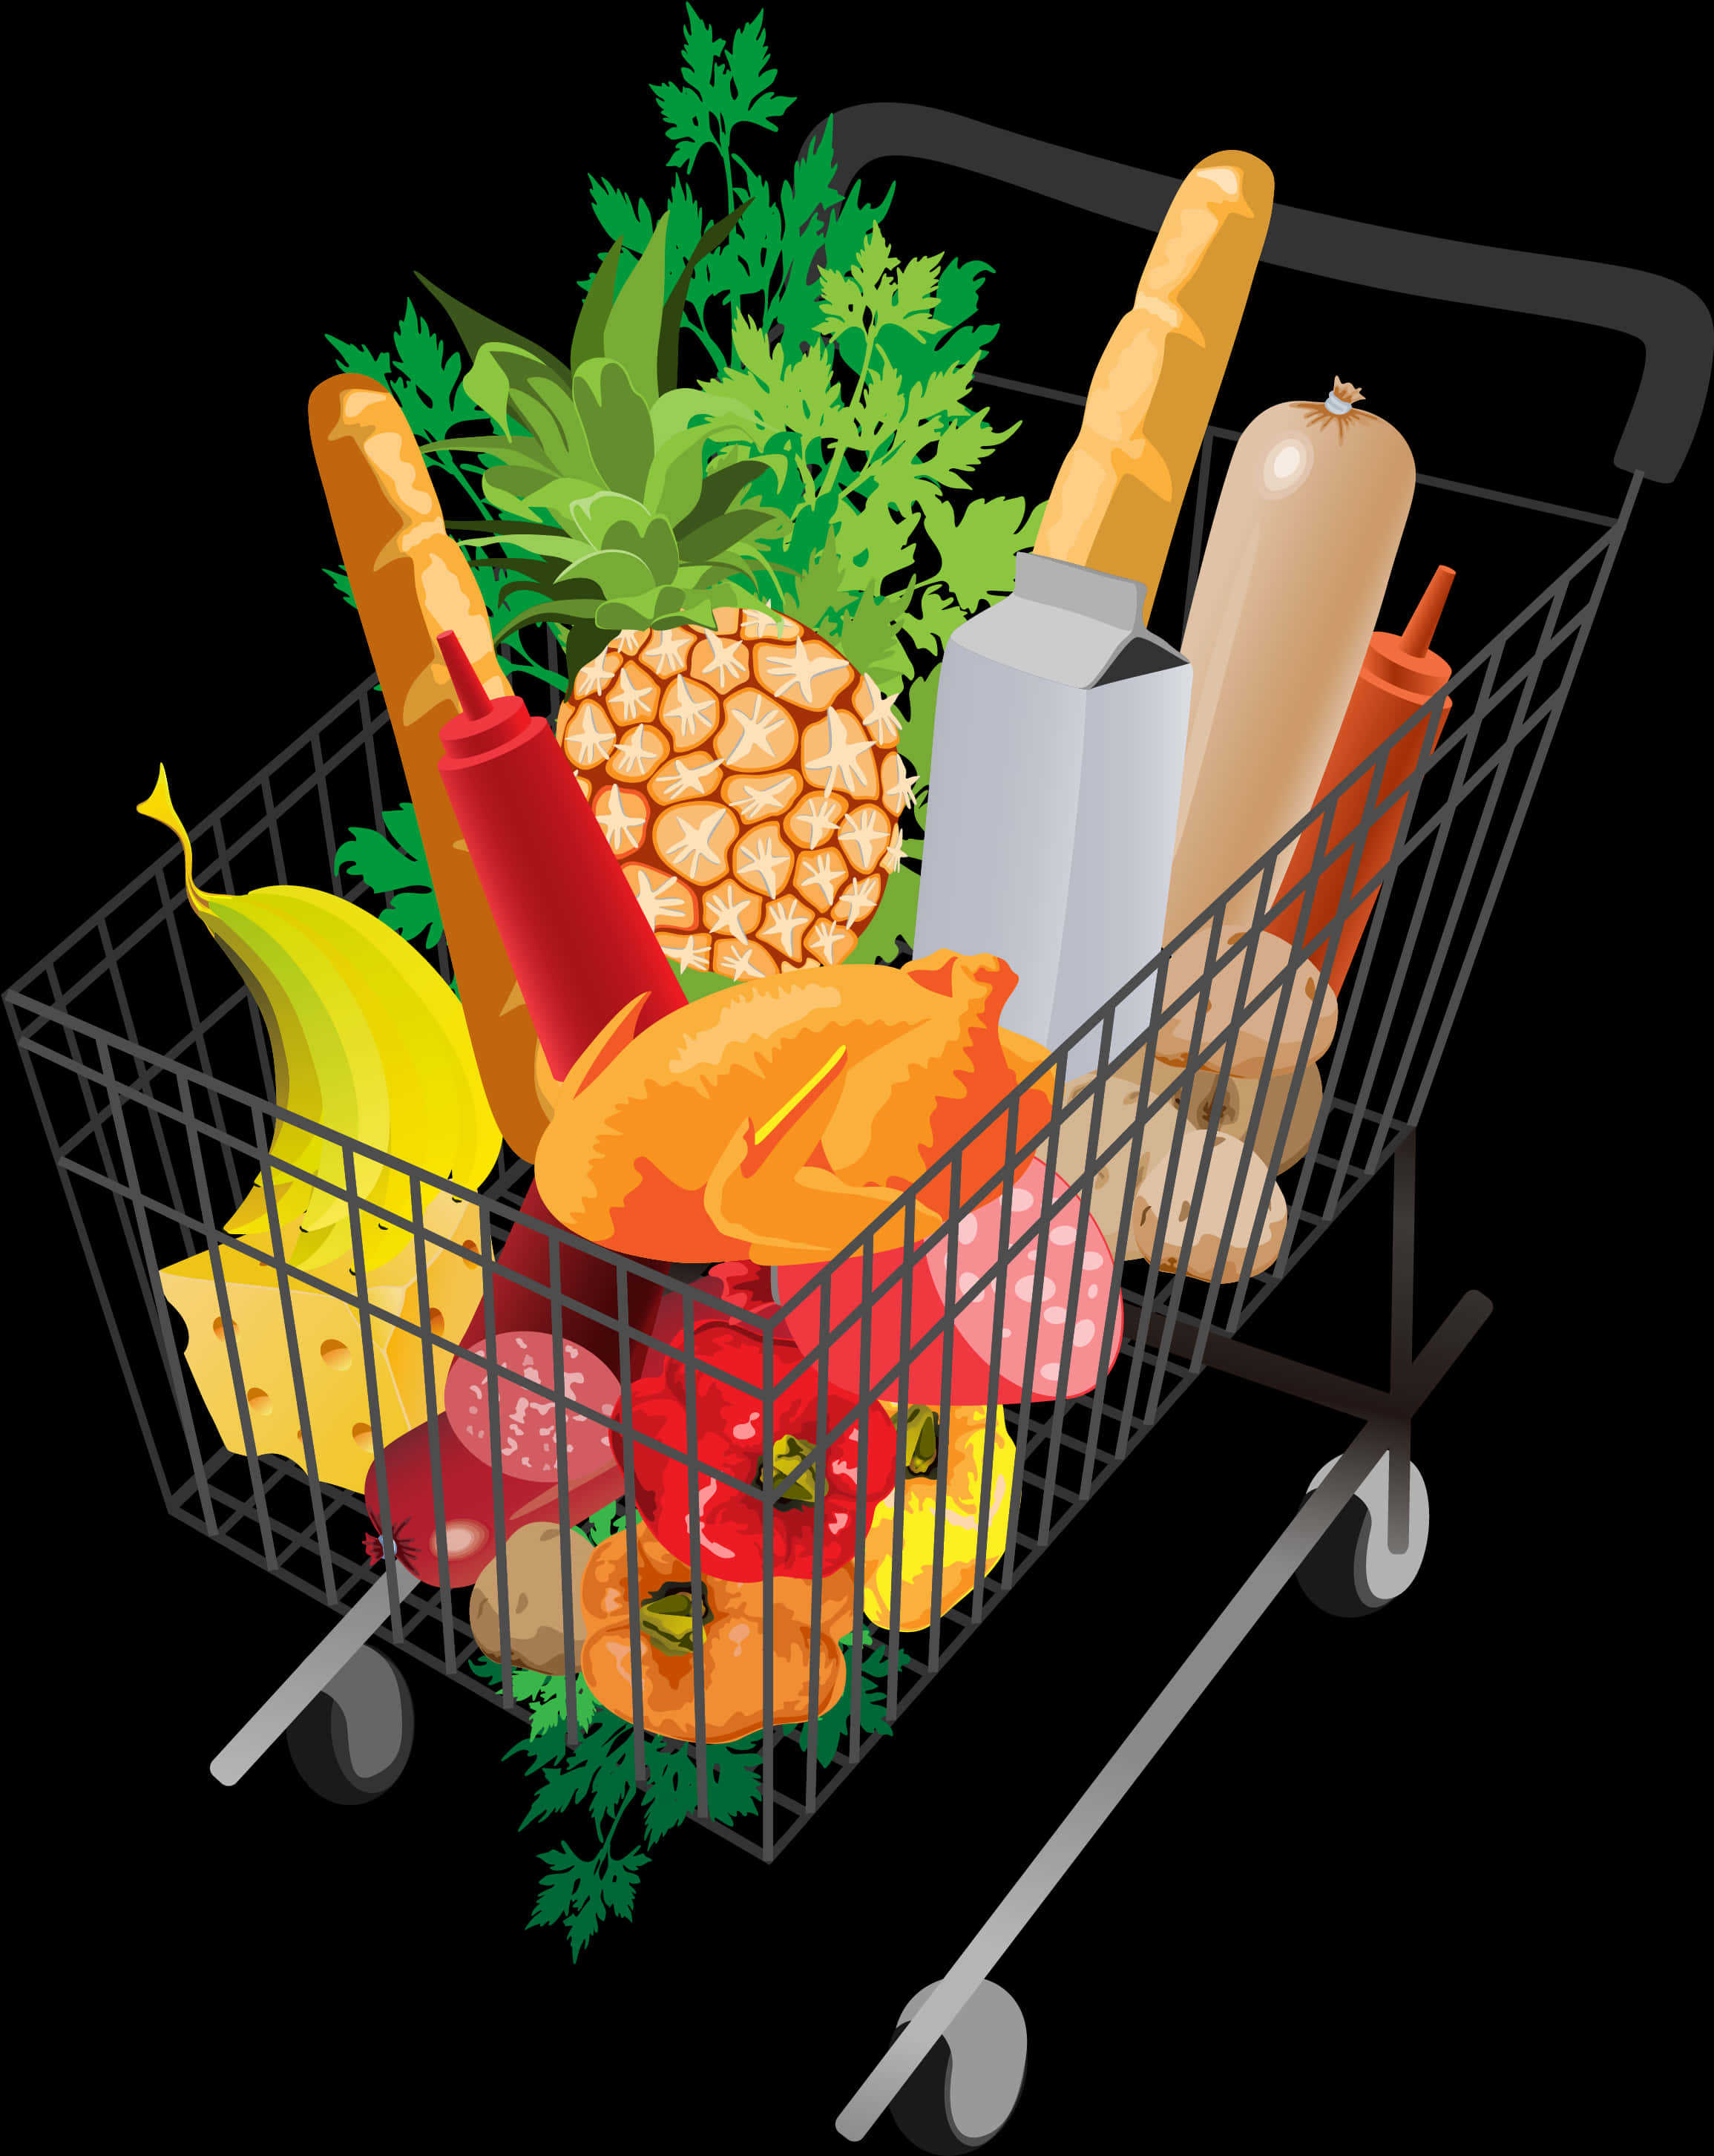 Grocery Shopping Cart Fullof Food Items.jpg PNG image